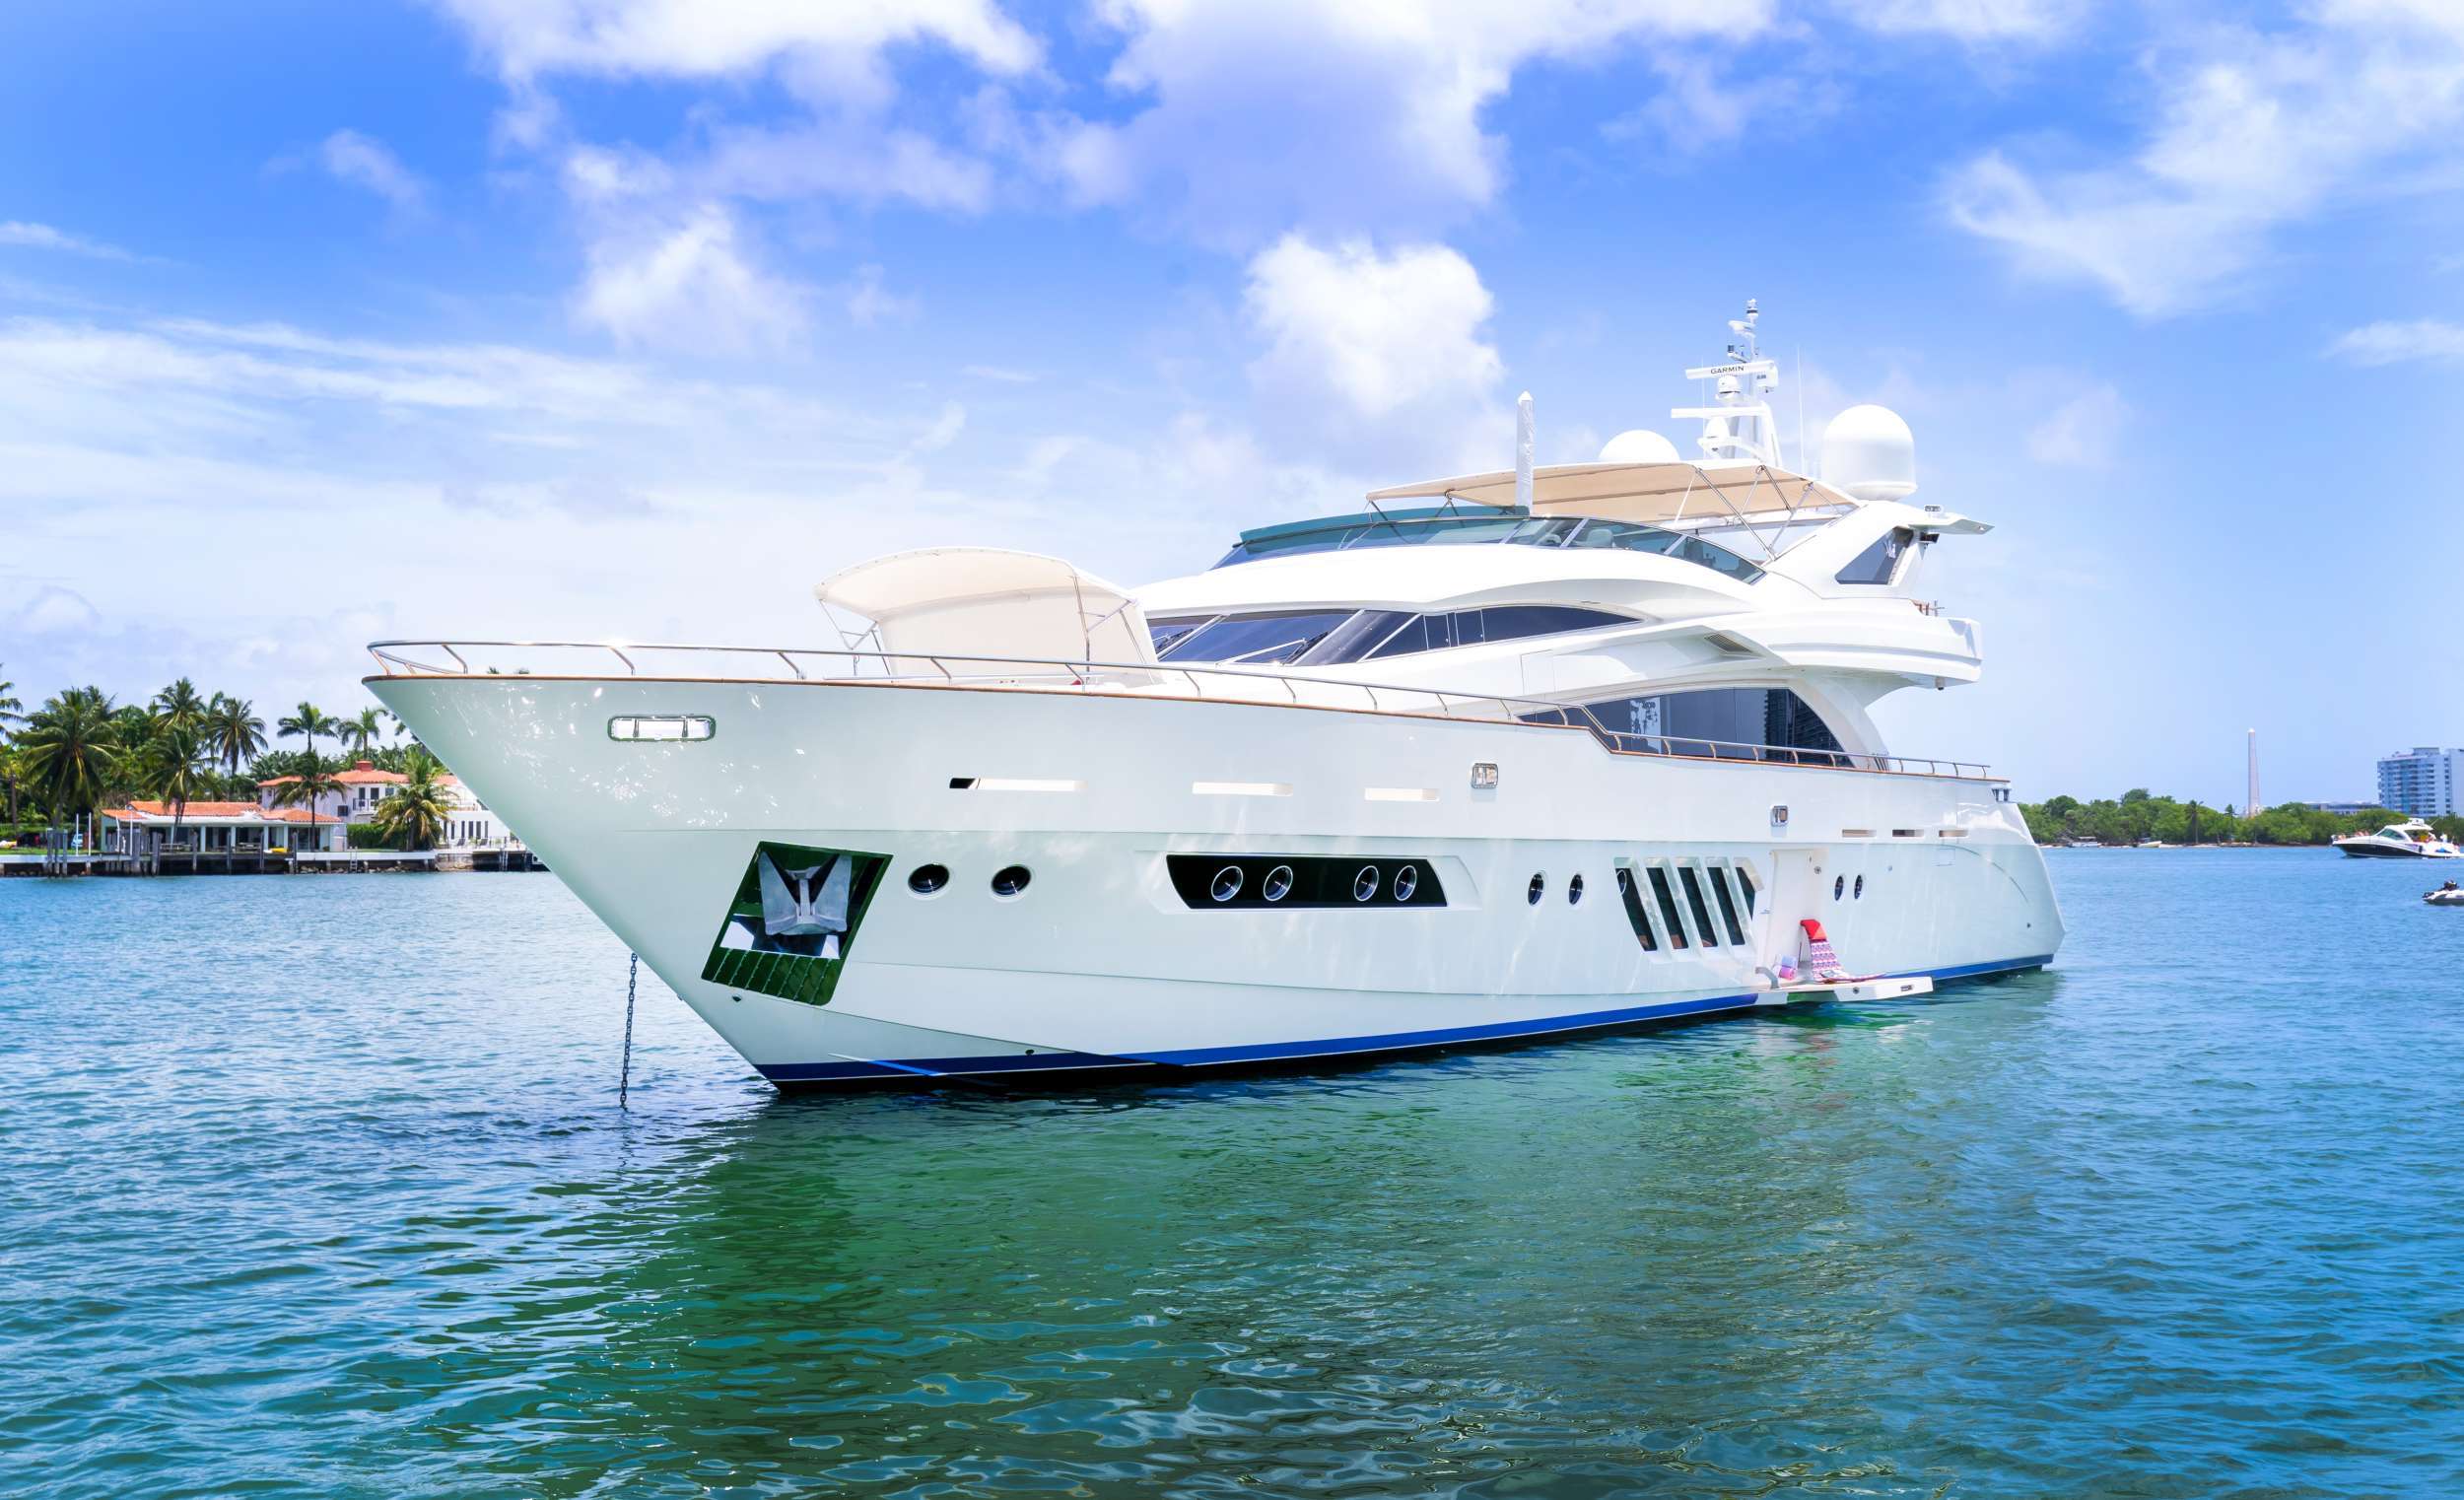 95 DOMINATOR - Yacht Charter Miami & Boat hire in US East Coast & Bahamas 1